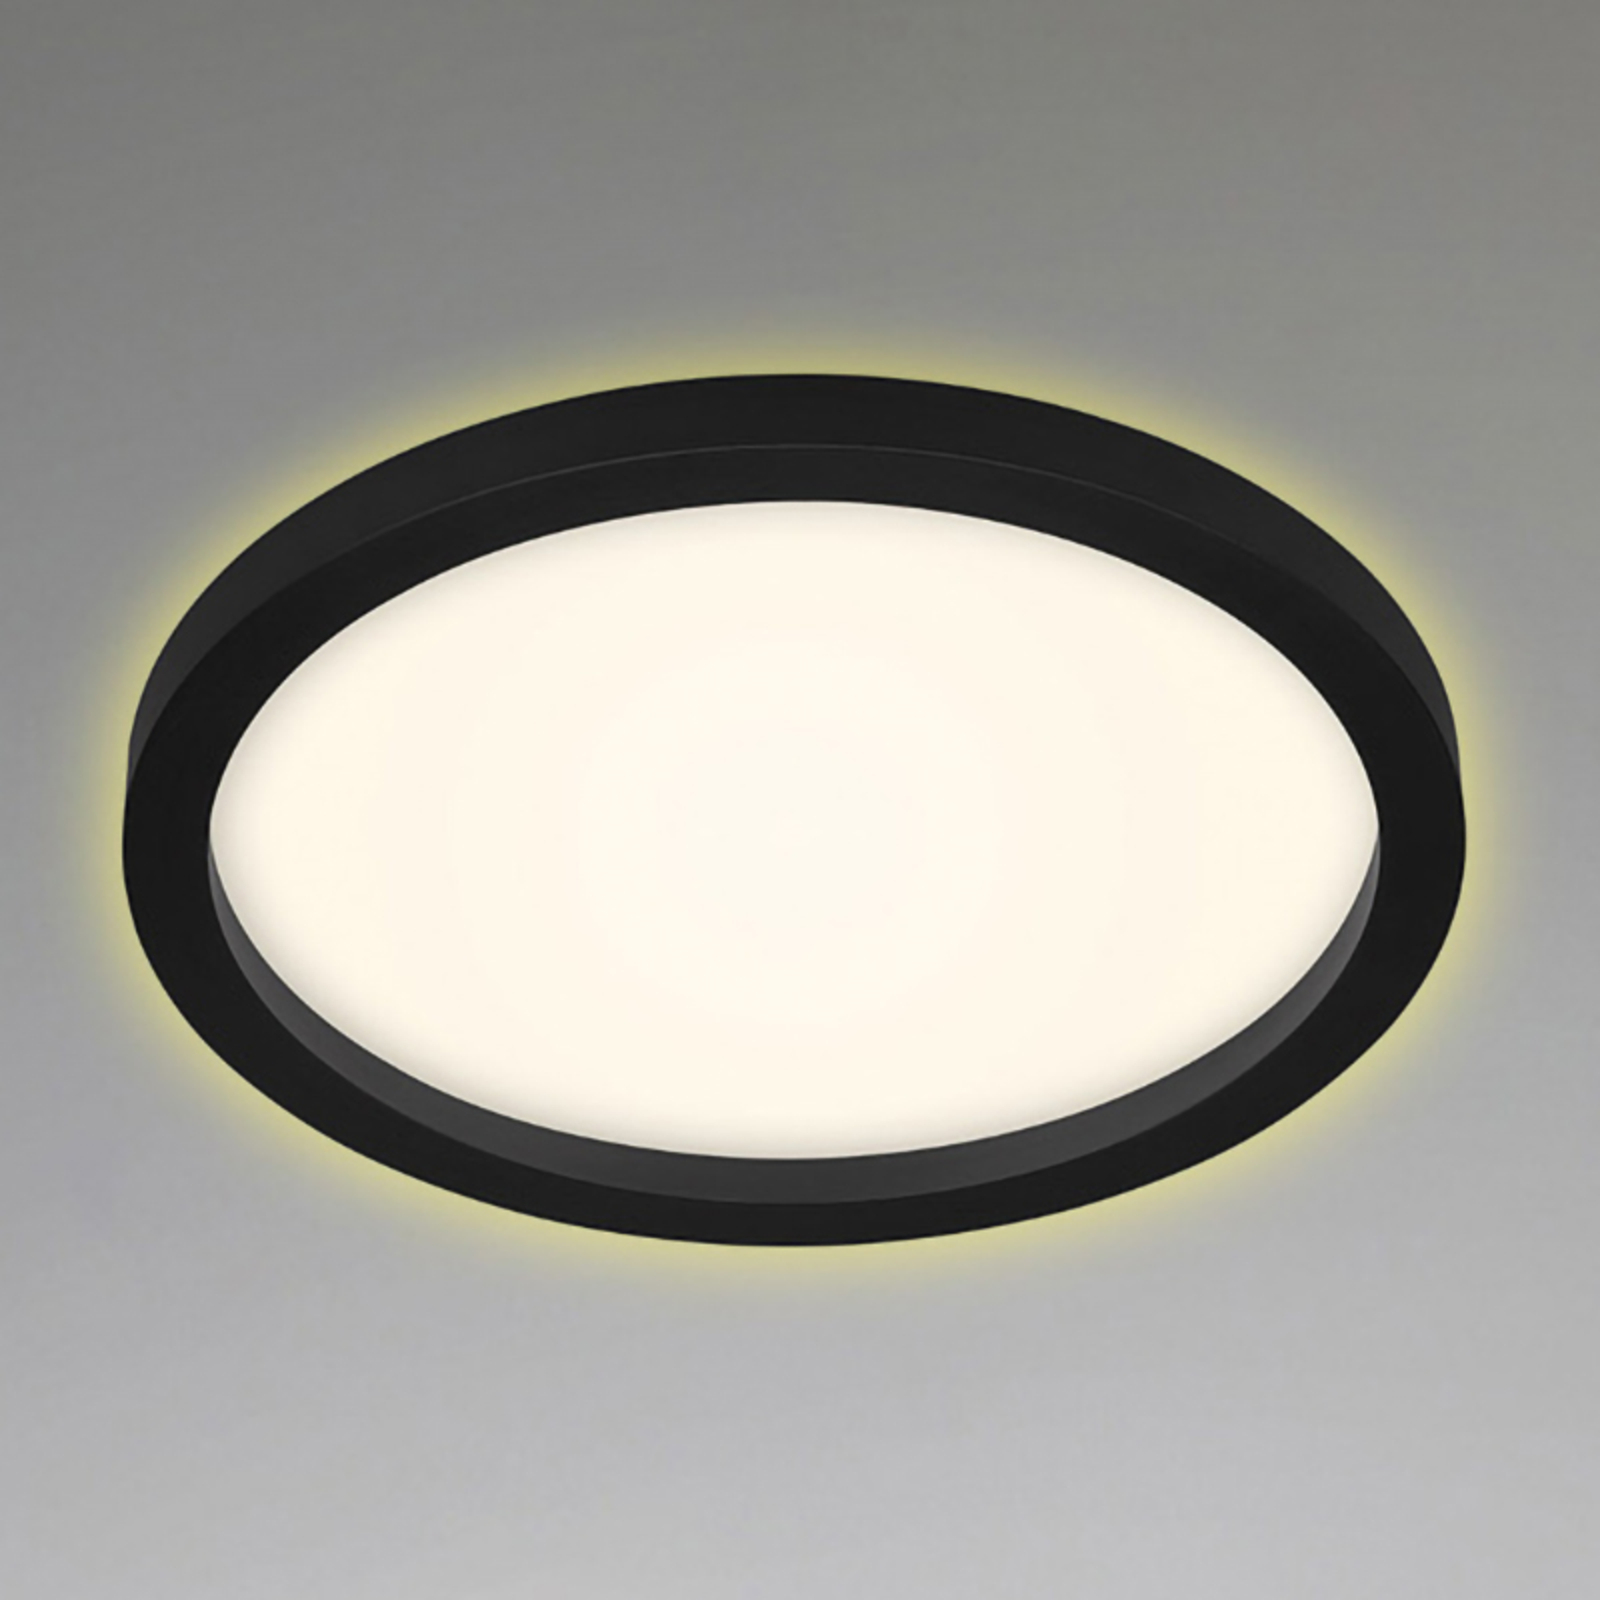 LED-taklampa 7361, Ø 29 cm, svart